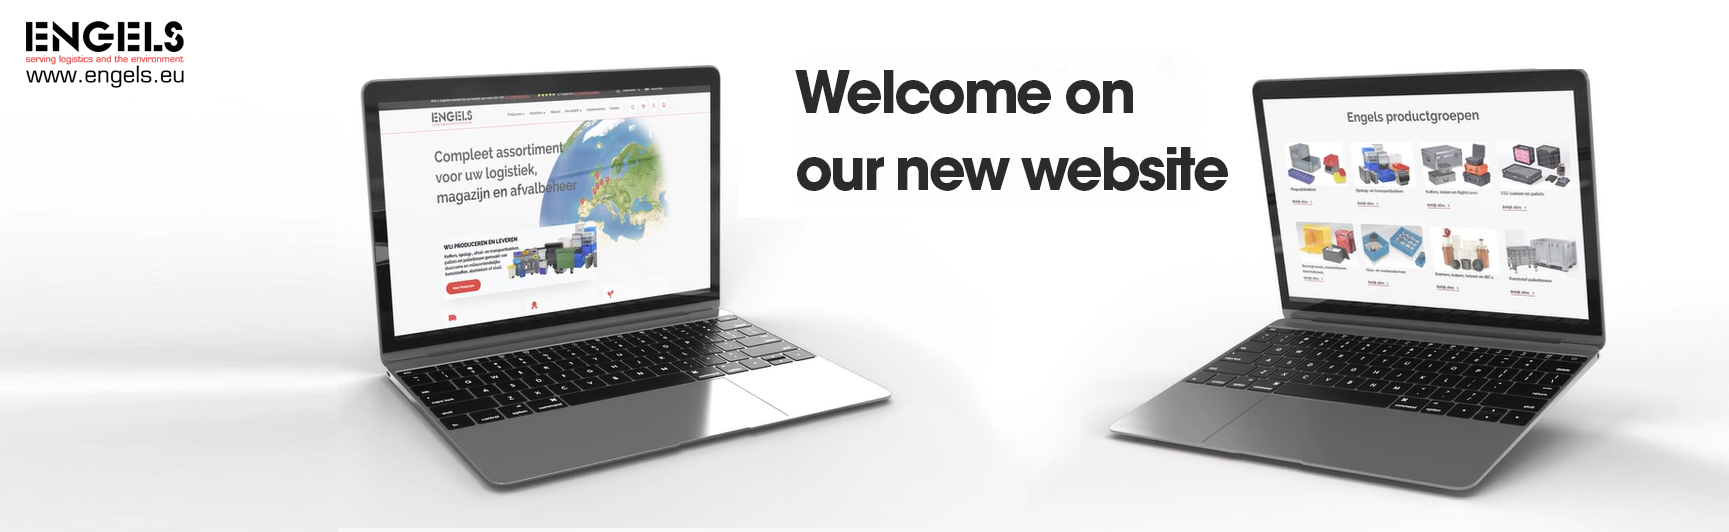 Launch new website Engels